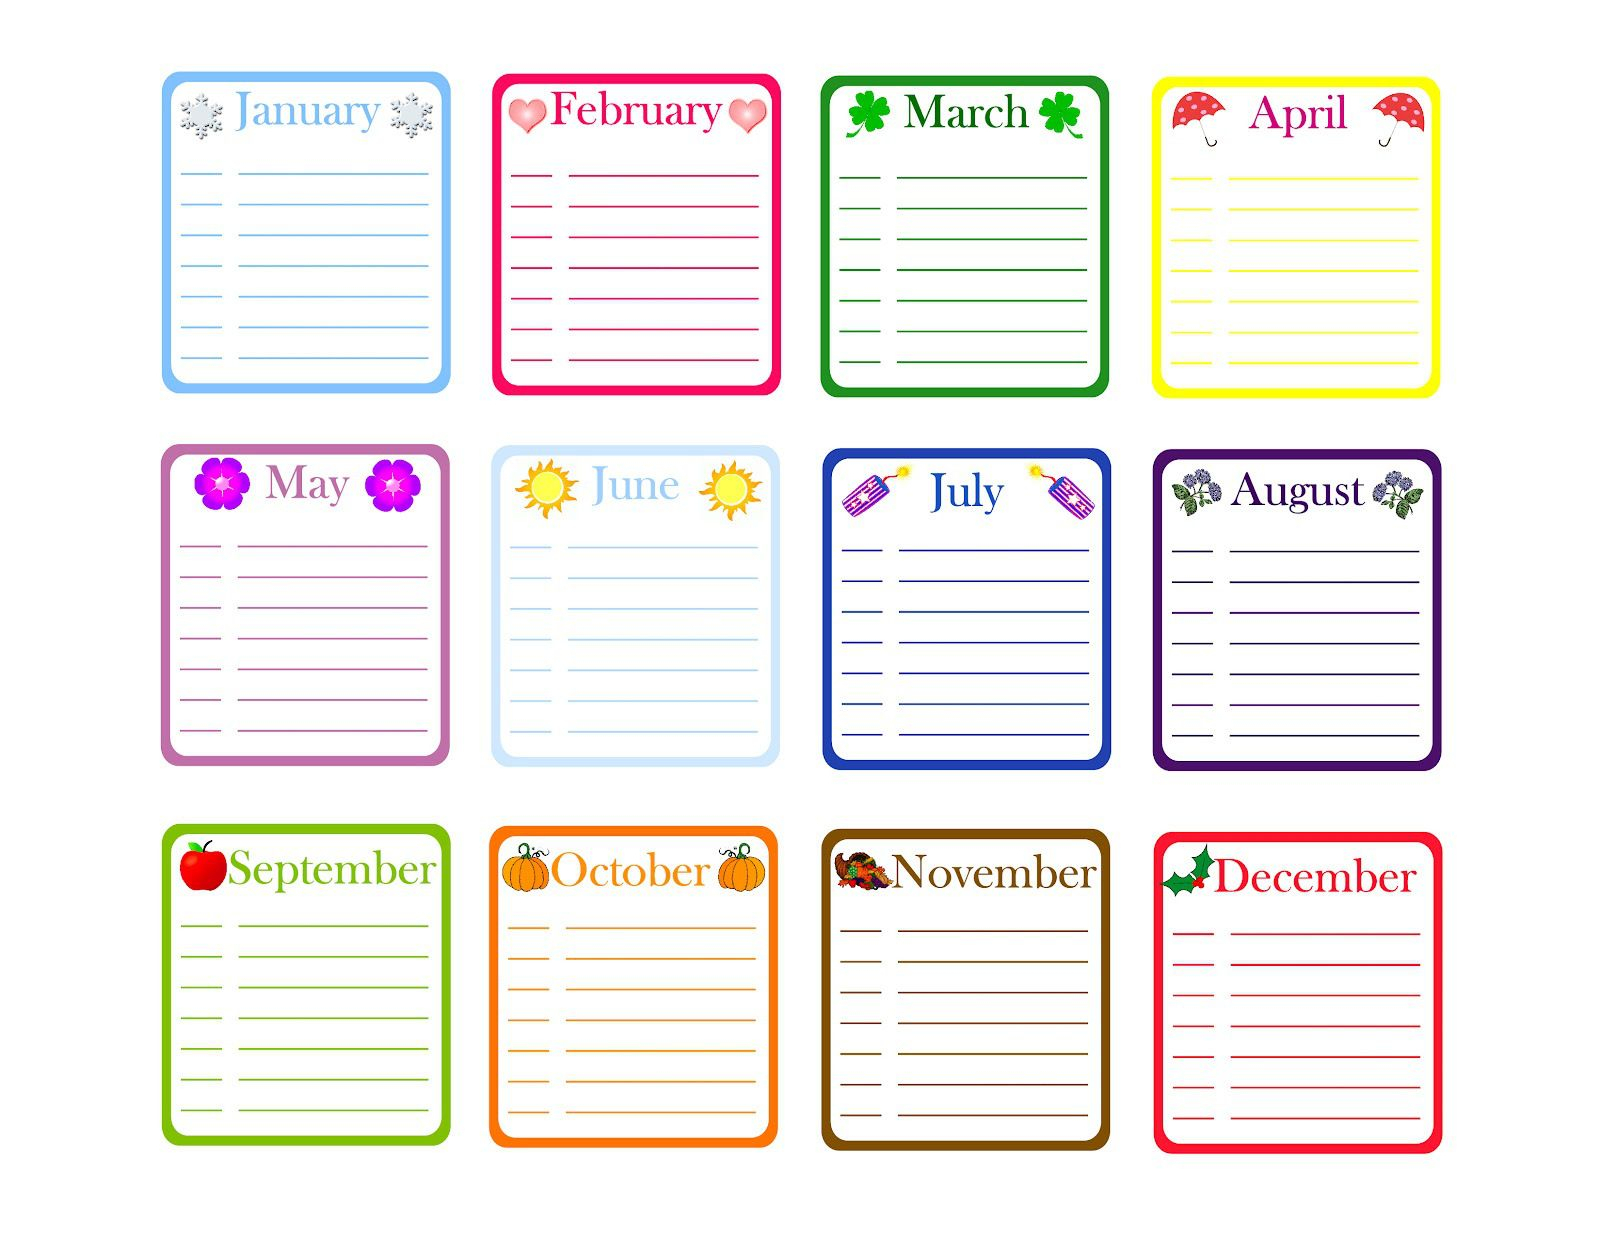 Yearly Birthday Calendar Template. Free Classroom Printables in Yearly Birthday Calendar Template